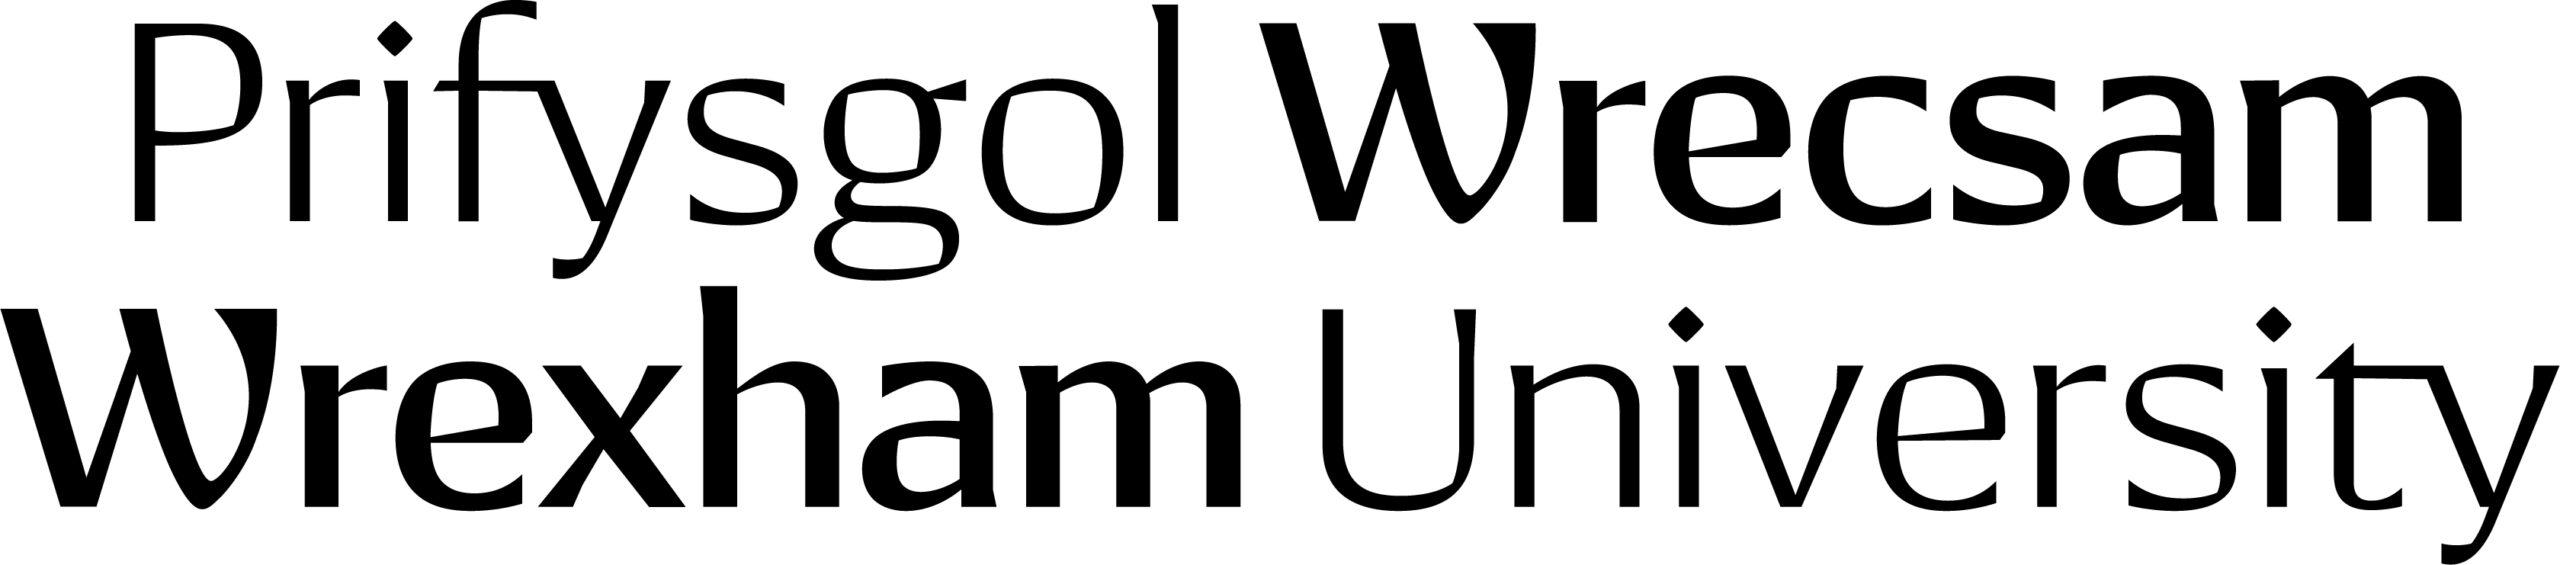 Wrexham University logo with a white background